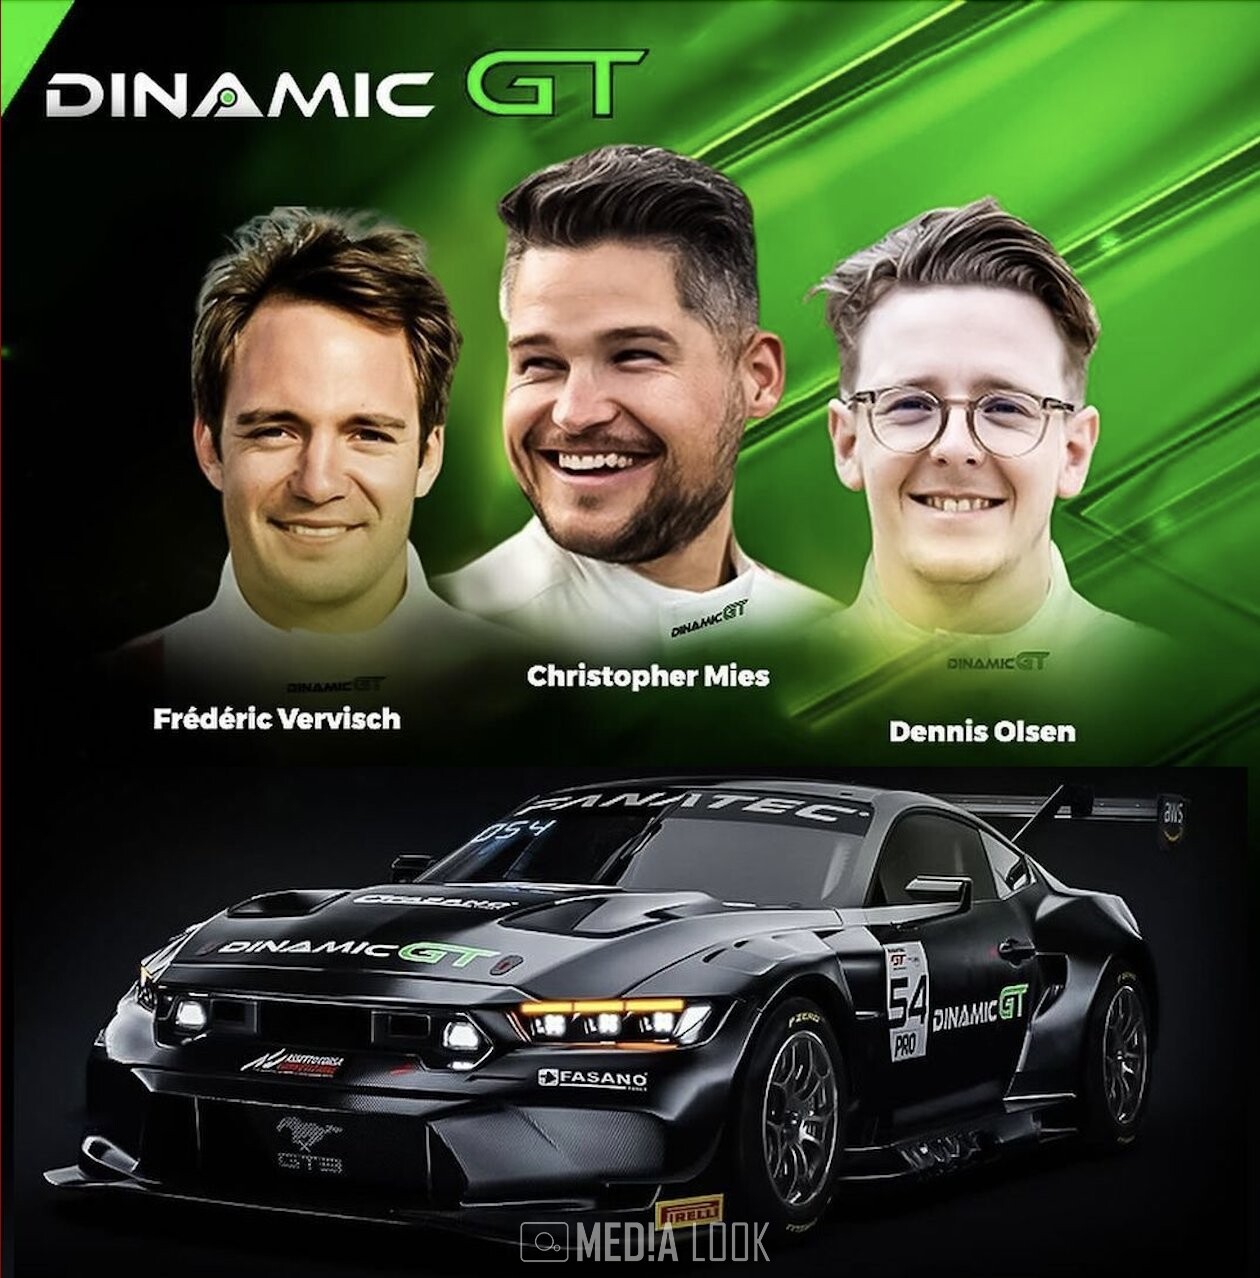 '2024 GTWC 유럽'에 출전할 '디나믹 GT'의 드라이버 라인업 / 사진 출처: Dinamic GT